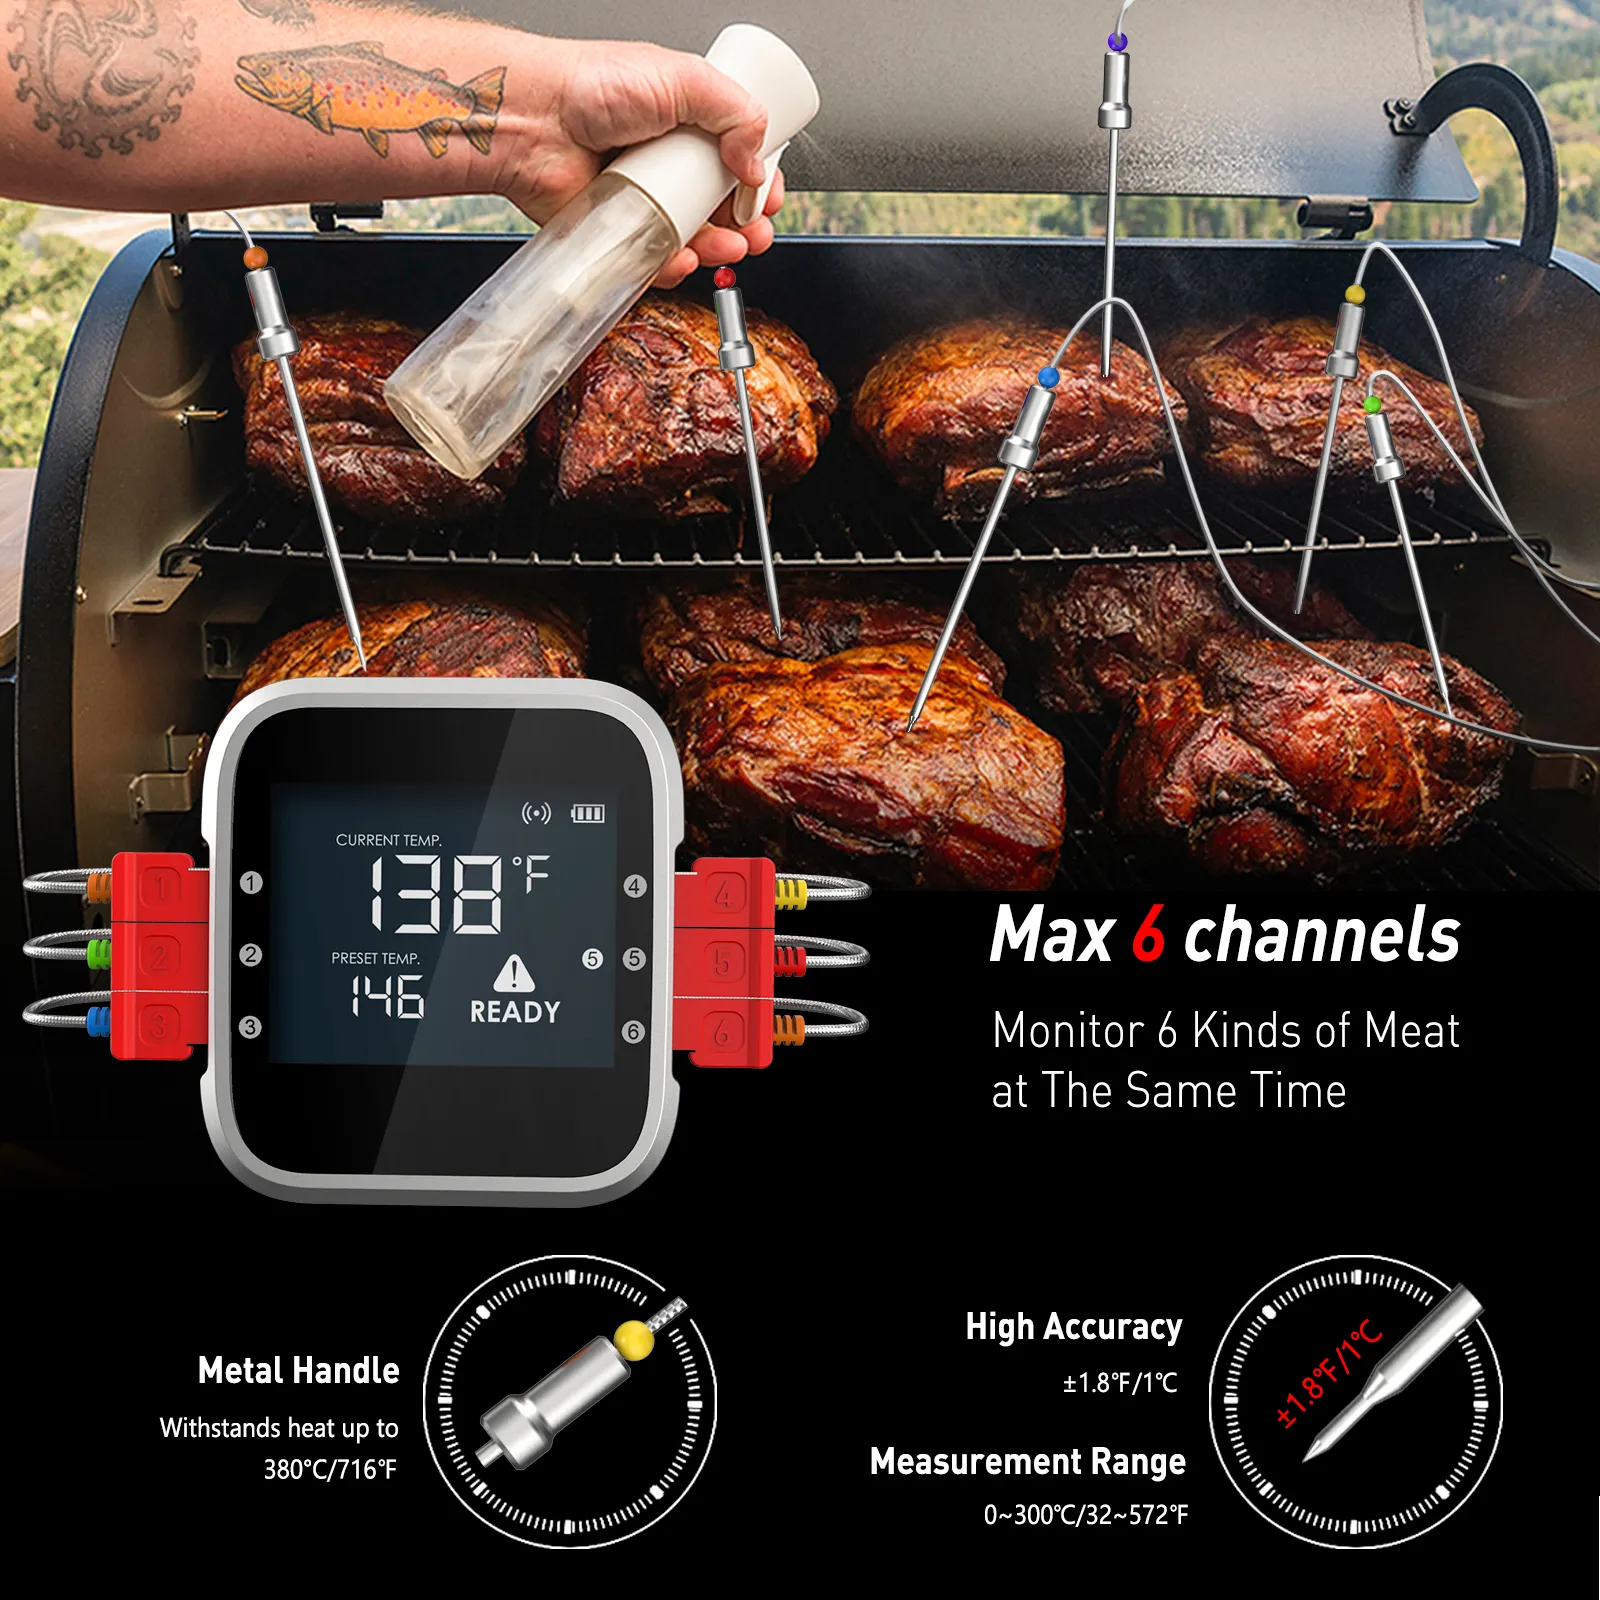 Led Digital Temperature Gauge Celsius Steak Medium Rare Food Grade Probe Meat Thermometer With Timer Alarm